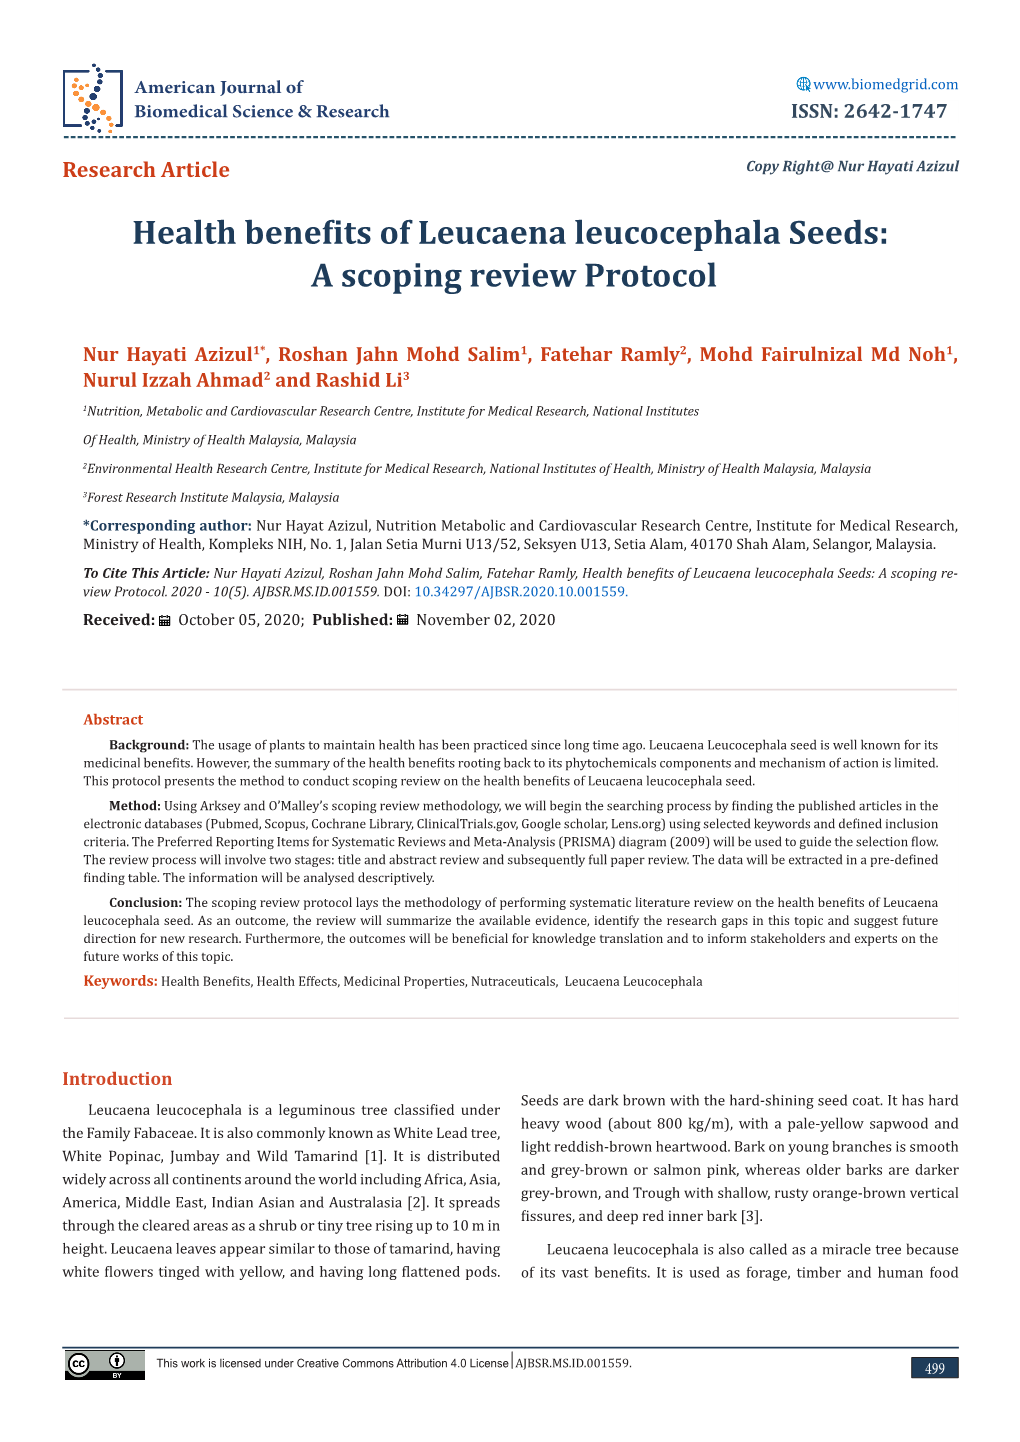 Health Benefits of Leucaena Leucocephala Seeds: a Scoping Review Protocol